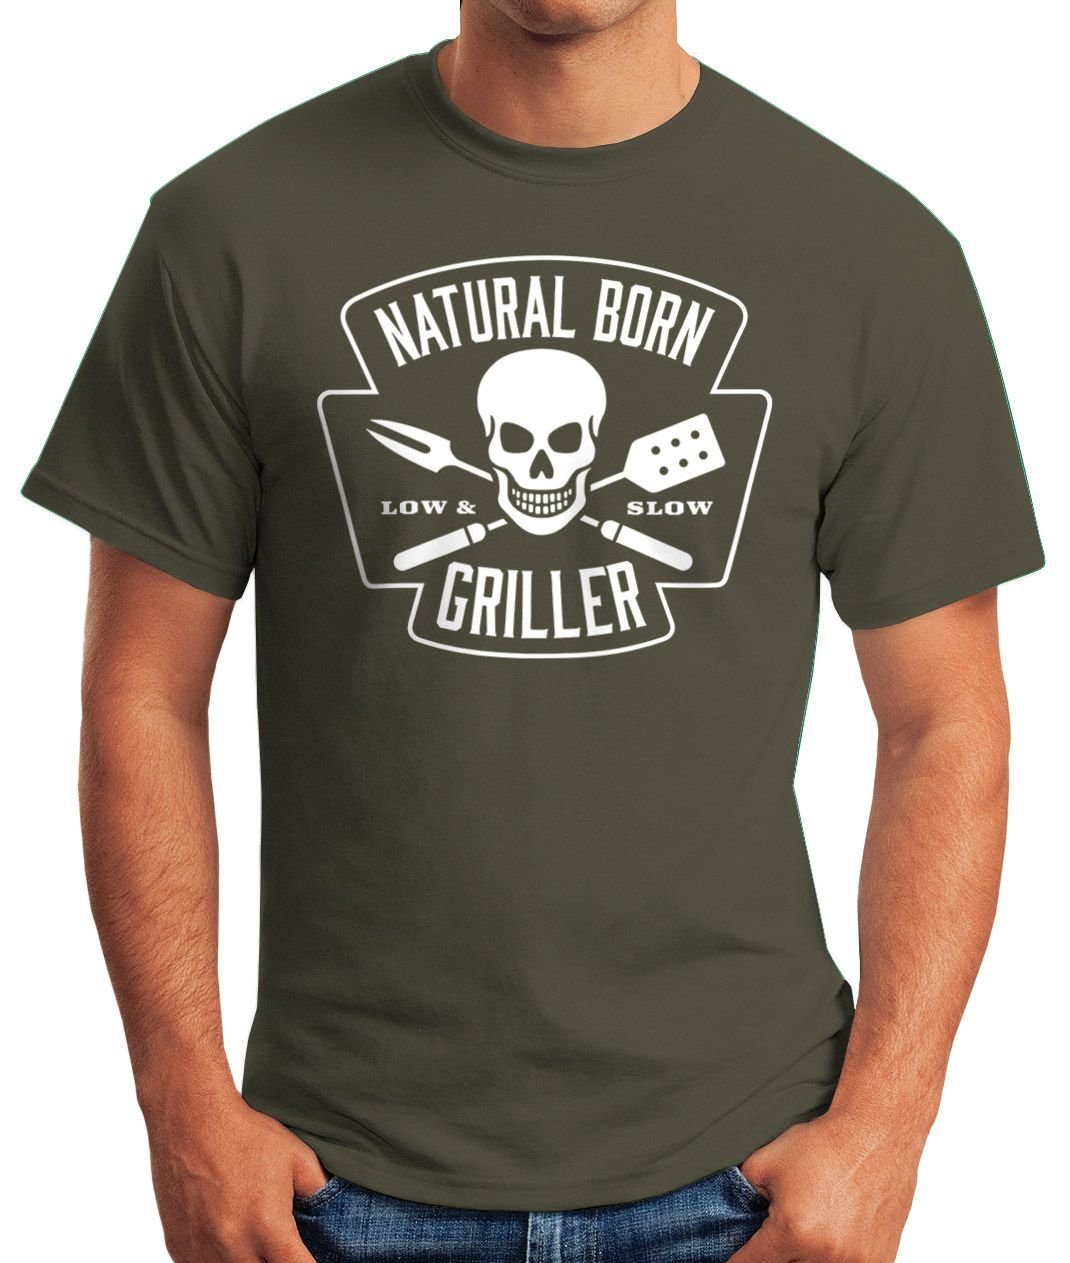 MoonWorks Print-Shirt Herren T-Shirt mit BBQ Fun-Shirt Natural Born Sommer Barbecue grün Grillen Food Print Tee Griller Moonworks®